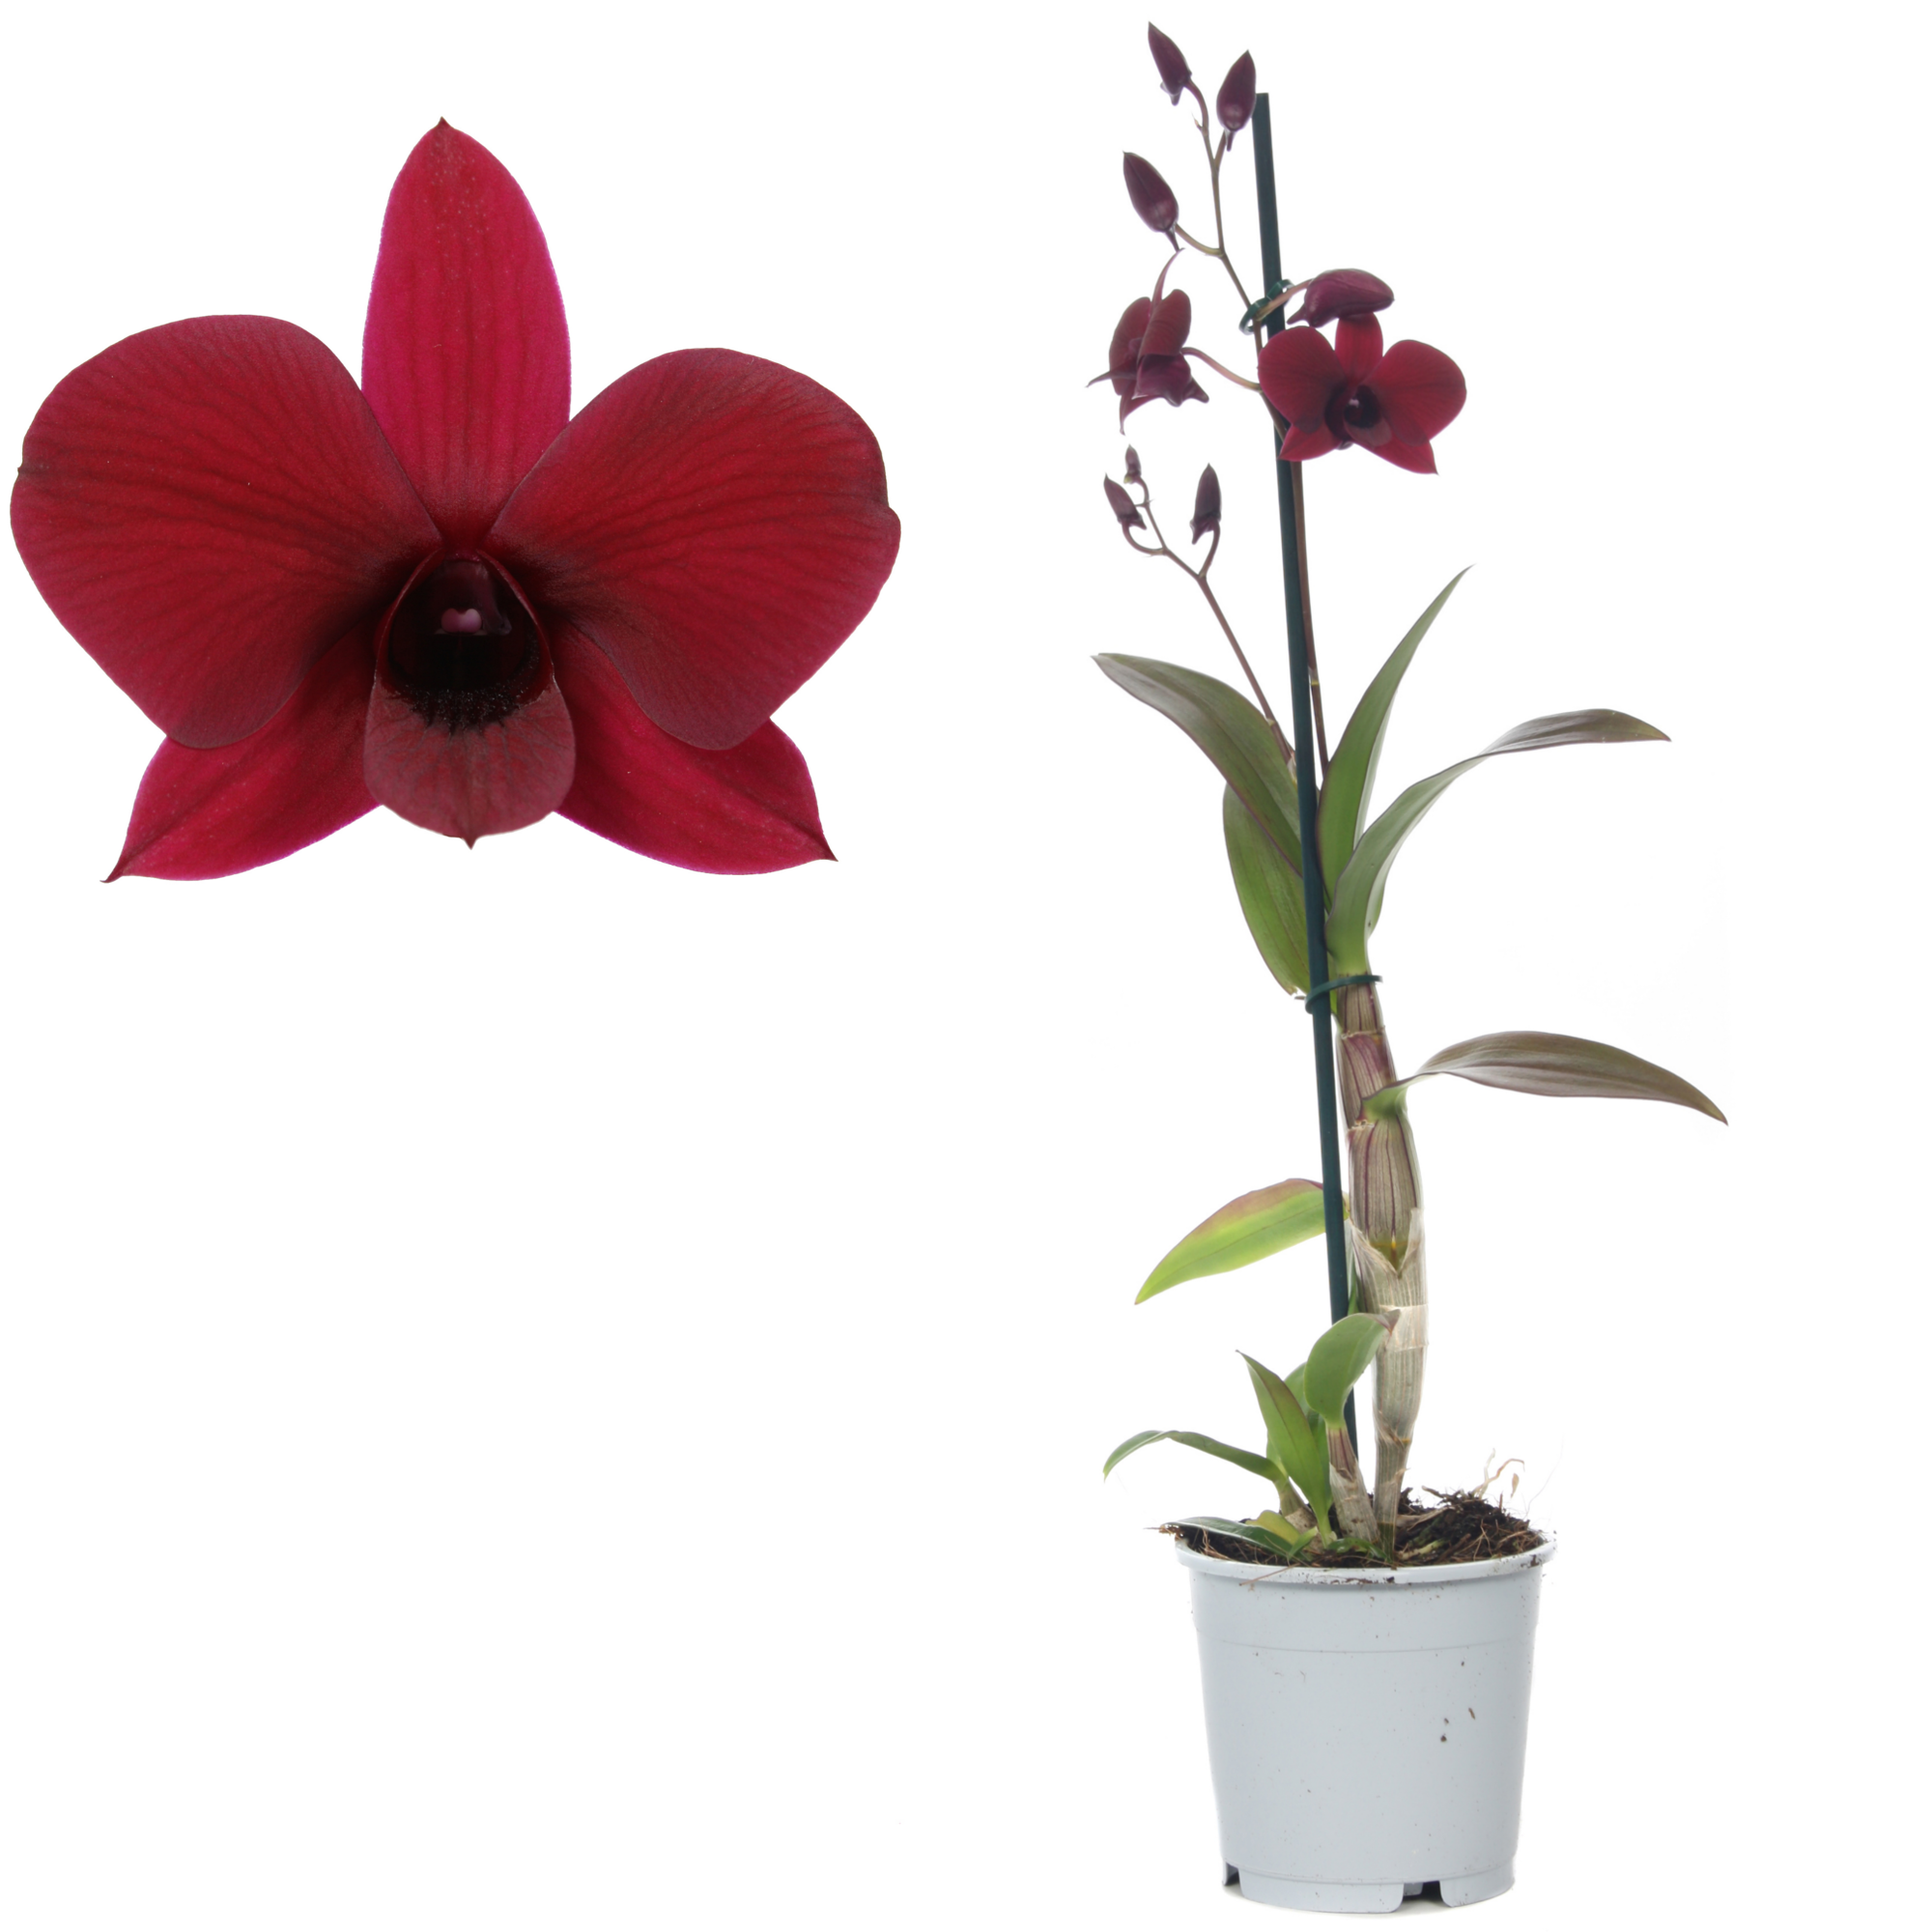 Dendrobium-Orchidee 'Thailand Black' 1 Rispe rot 11 cm Topf + product picture